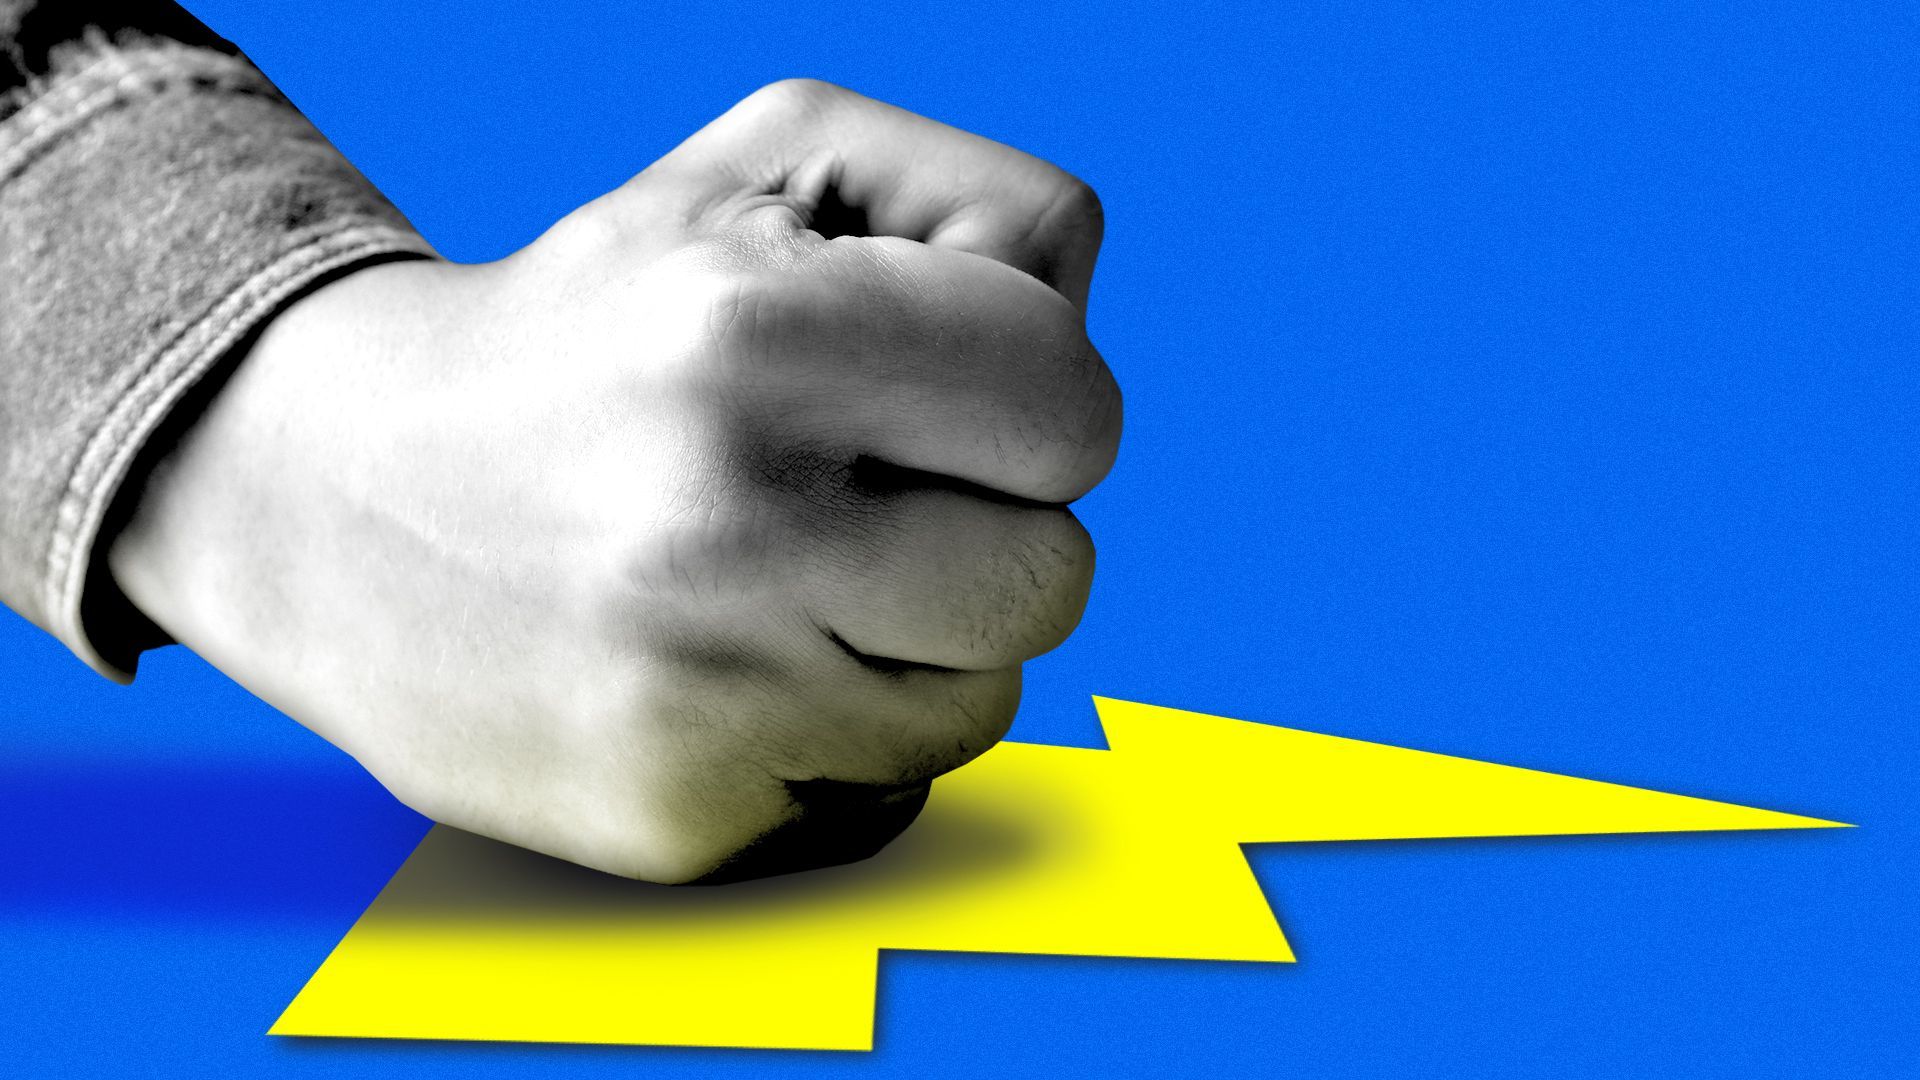 Illustration of a fist slammed down on top of a flattened lightning bolt symbol.